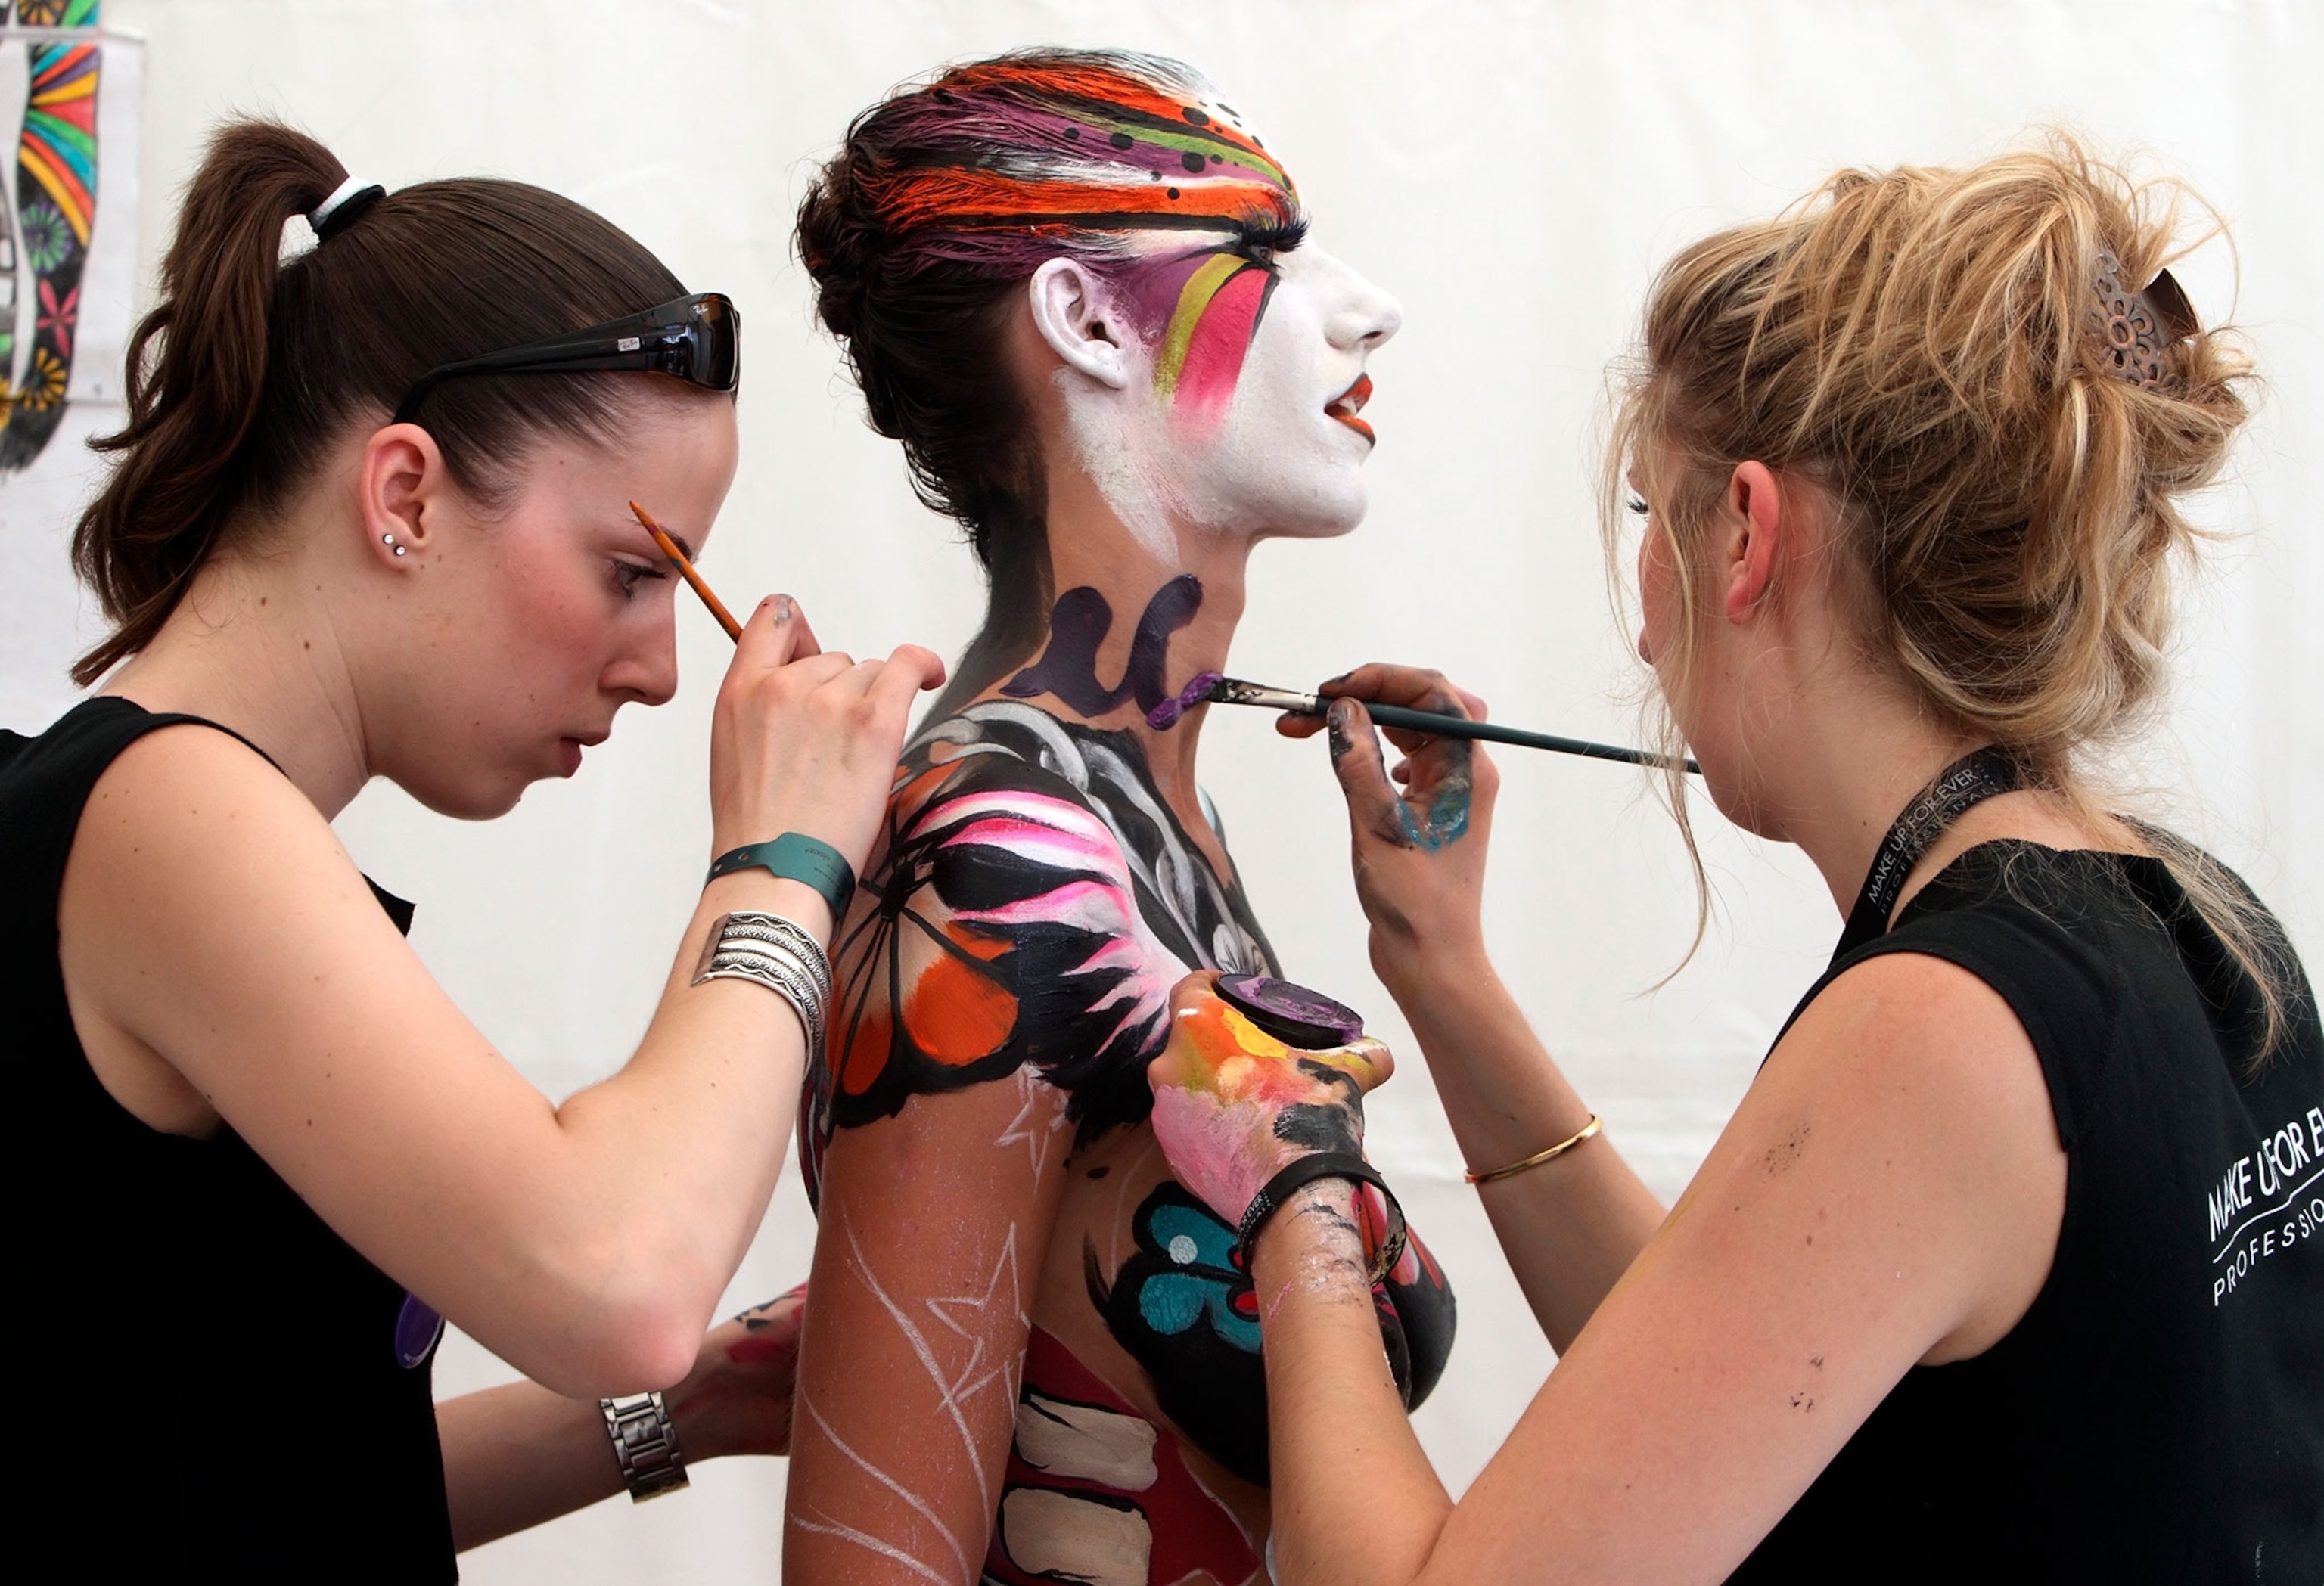 female body painting festival